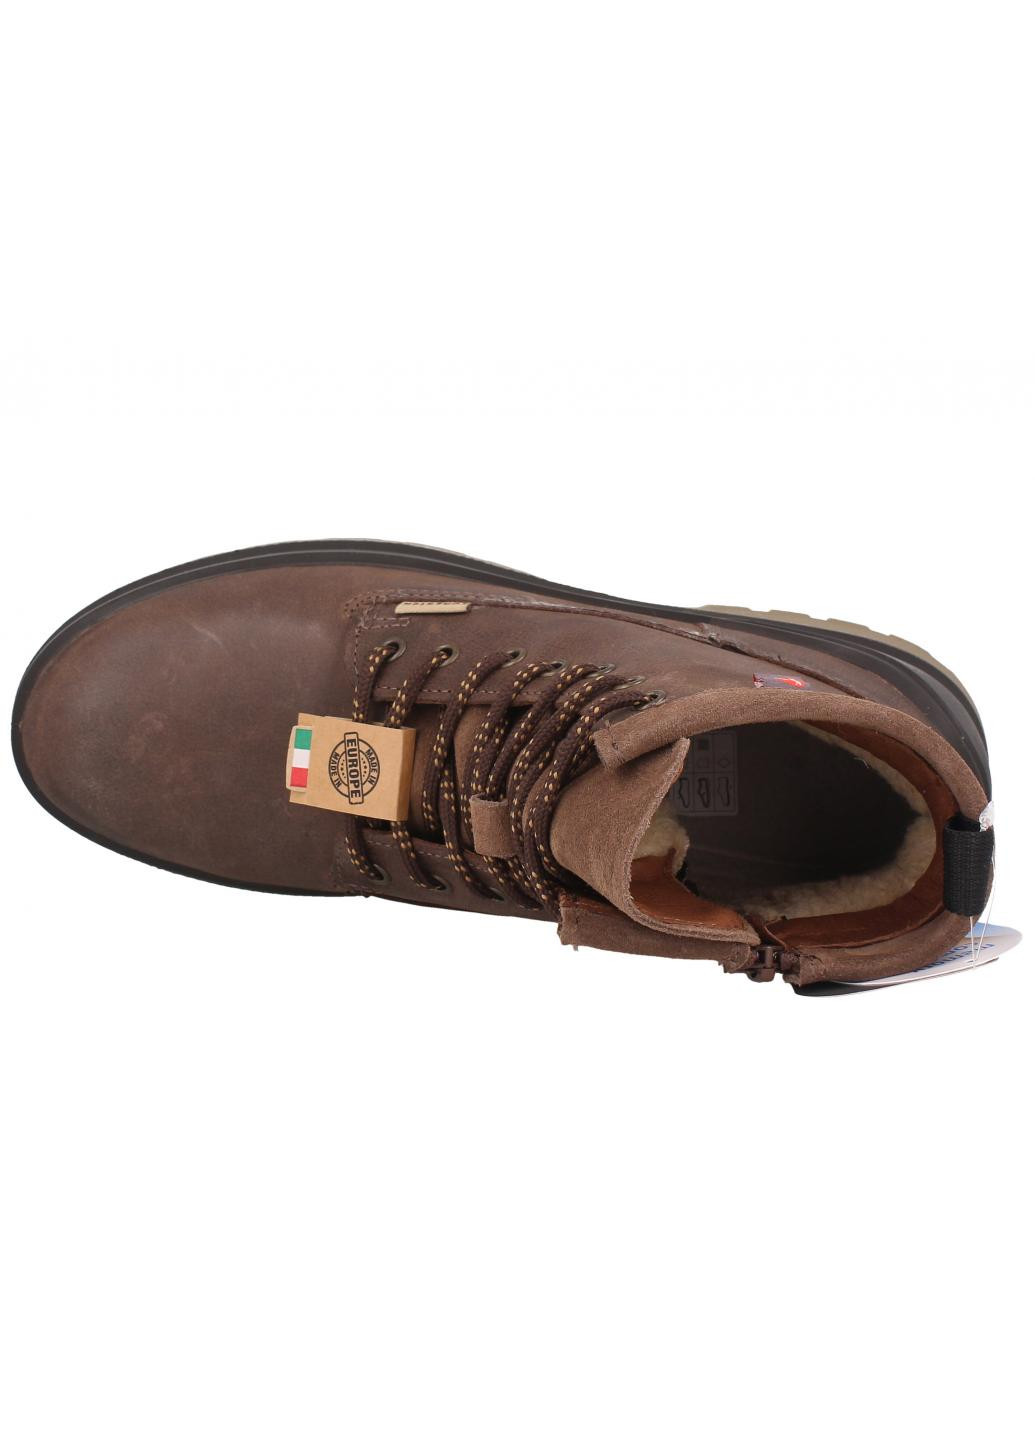 Коричневые зимние мужские ботинки tewa primaloft 18401-17 made in europe Forester